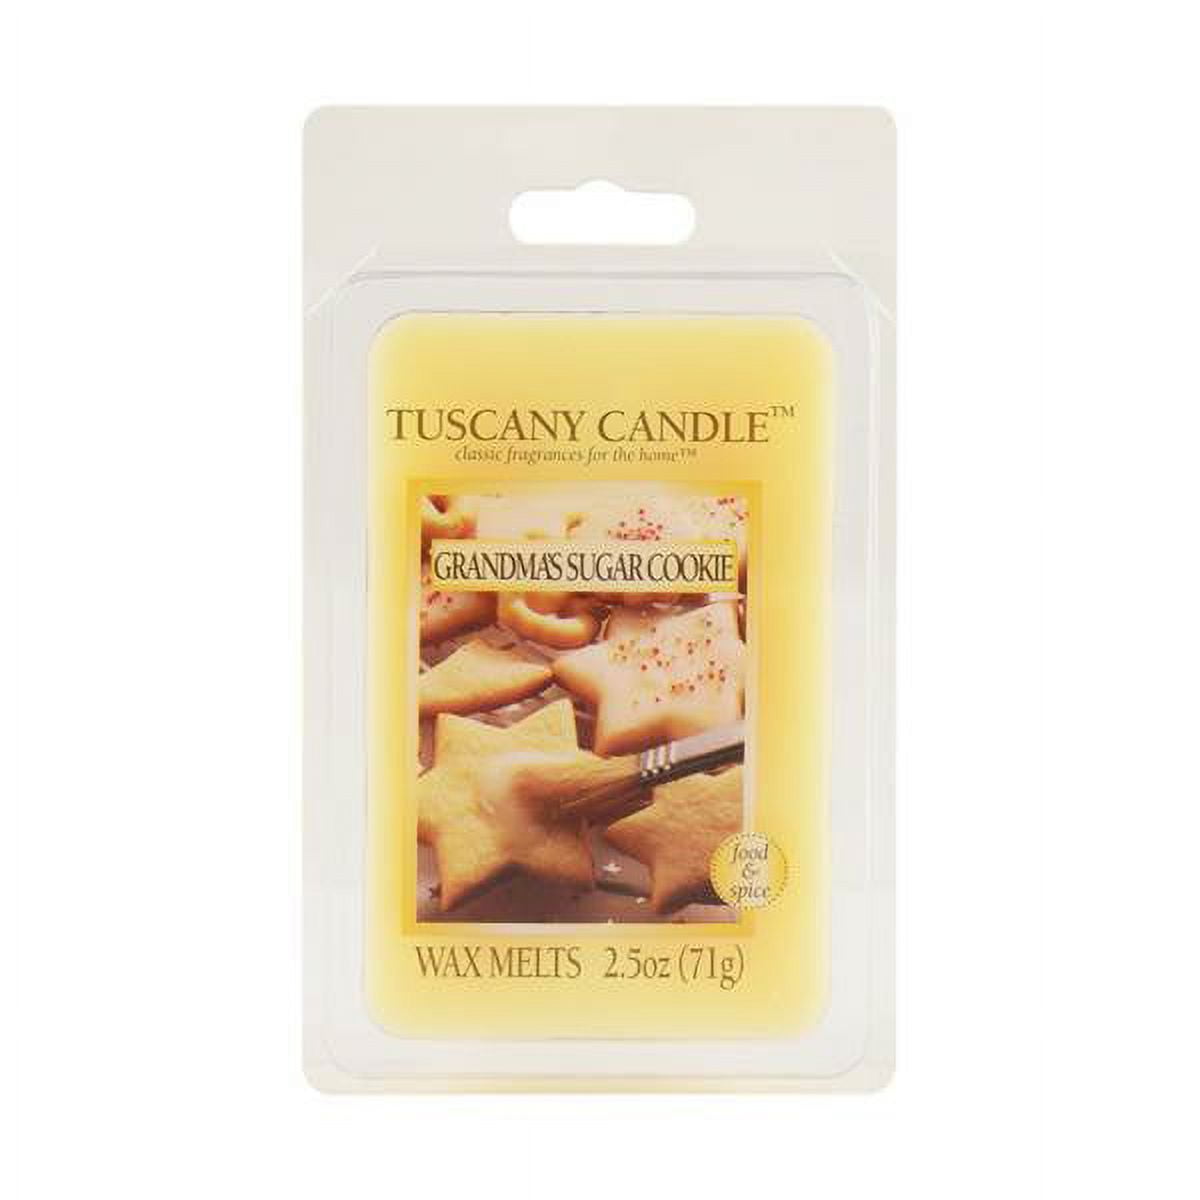 Tuscany Candle Cinnamon Wax Melts, 6 pk / 2.5 oz - Kroger